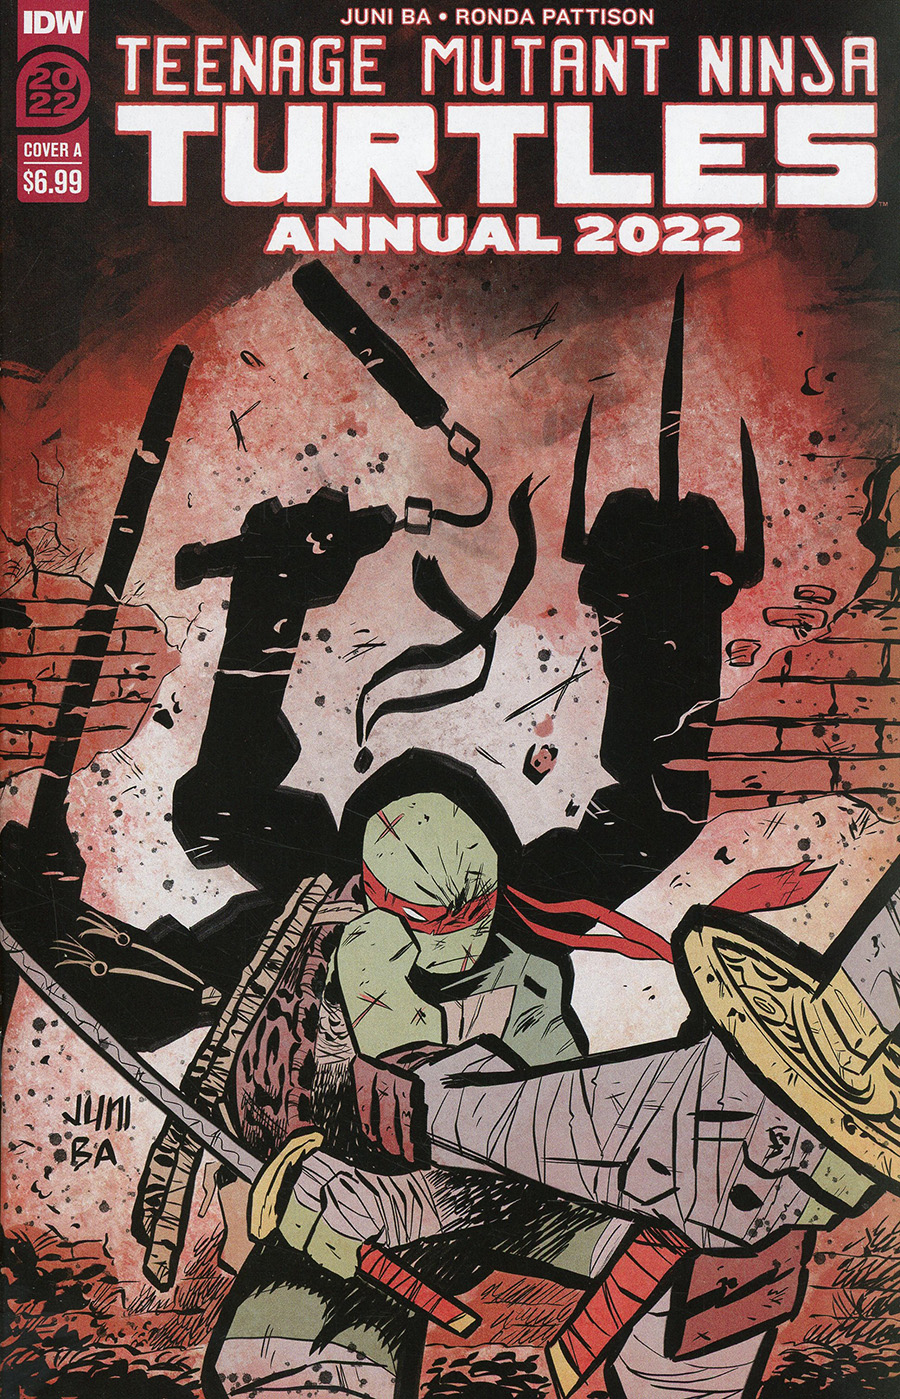 Teenage Mutant Ninja Turtles Vol 5 Annual 2022 #1 (One Shot) Cover A Regular Juni Ba Cover